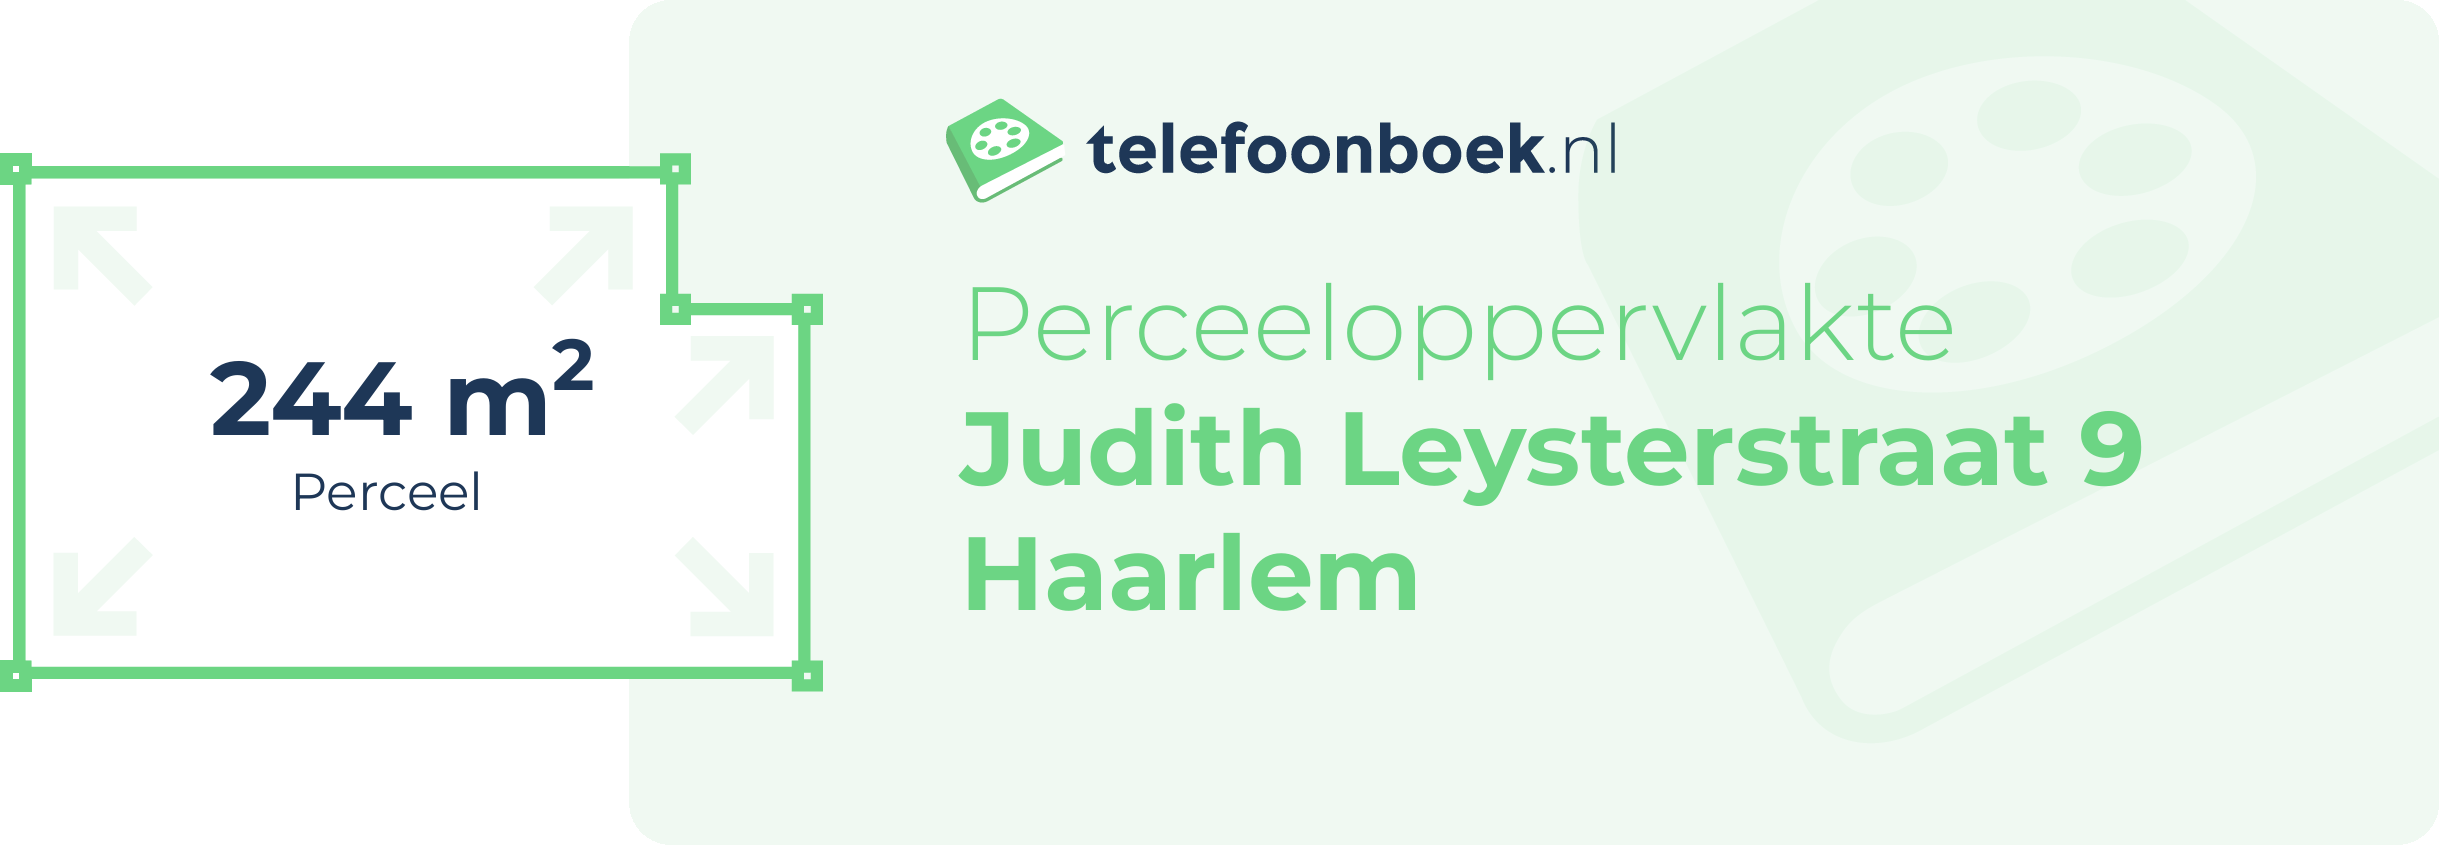 Perceeloppervlakte Judith Leysterstraat 9 Haarlem